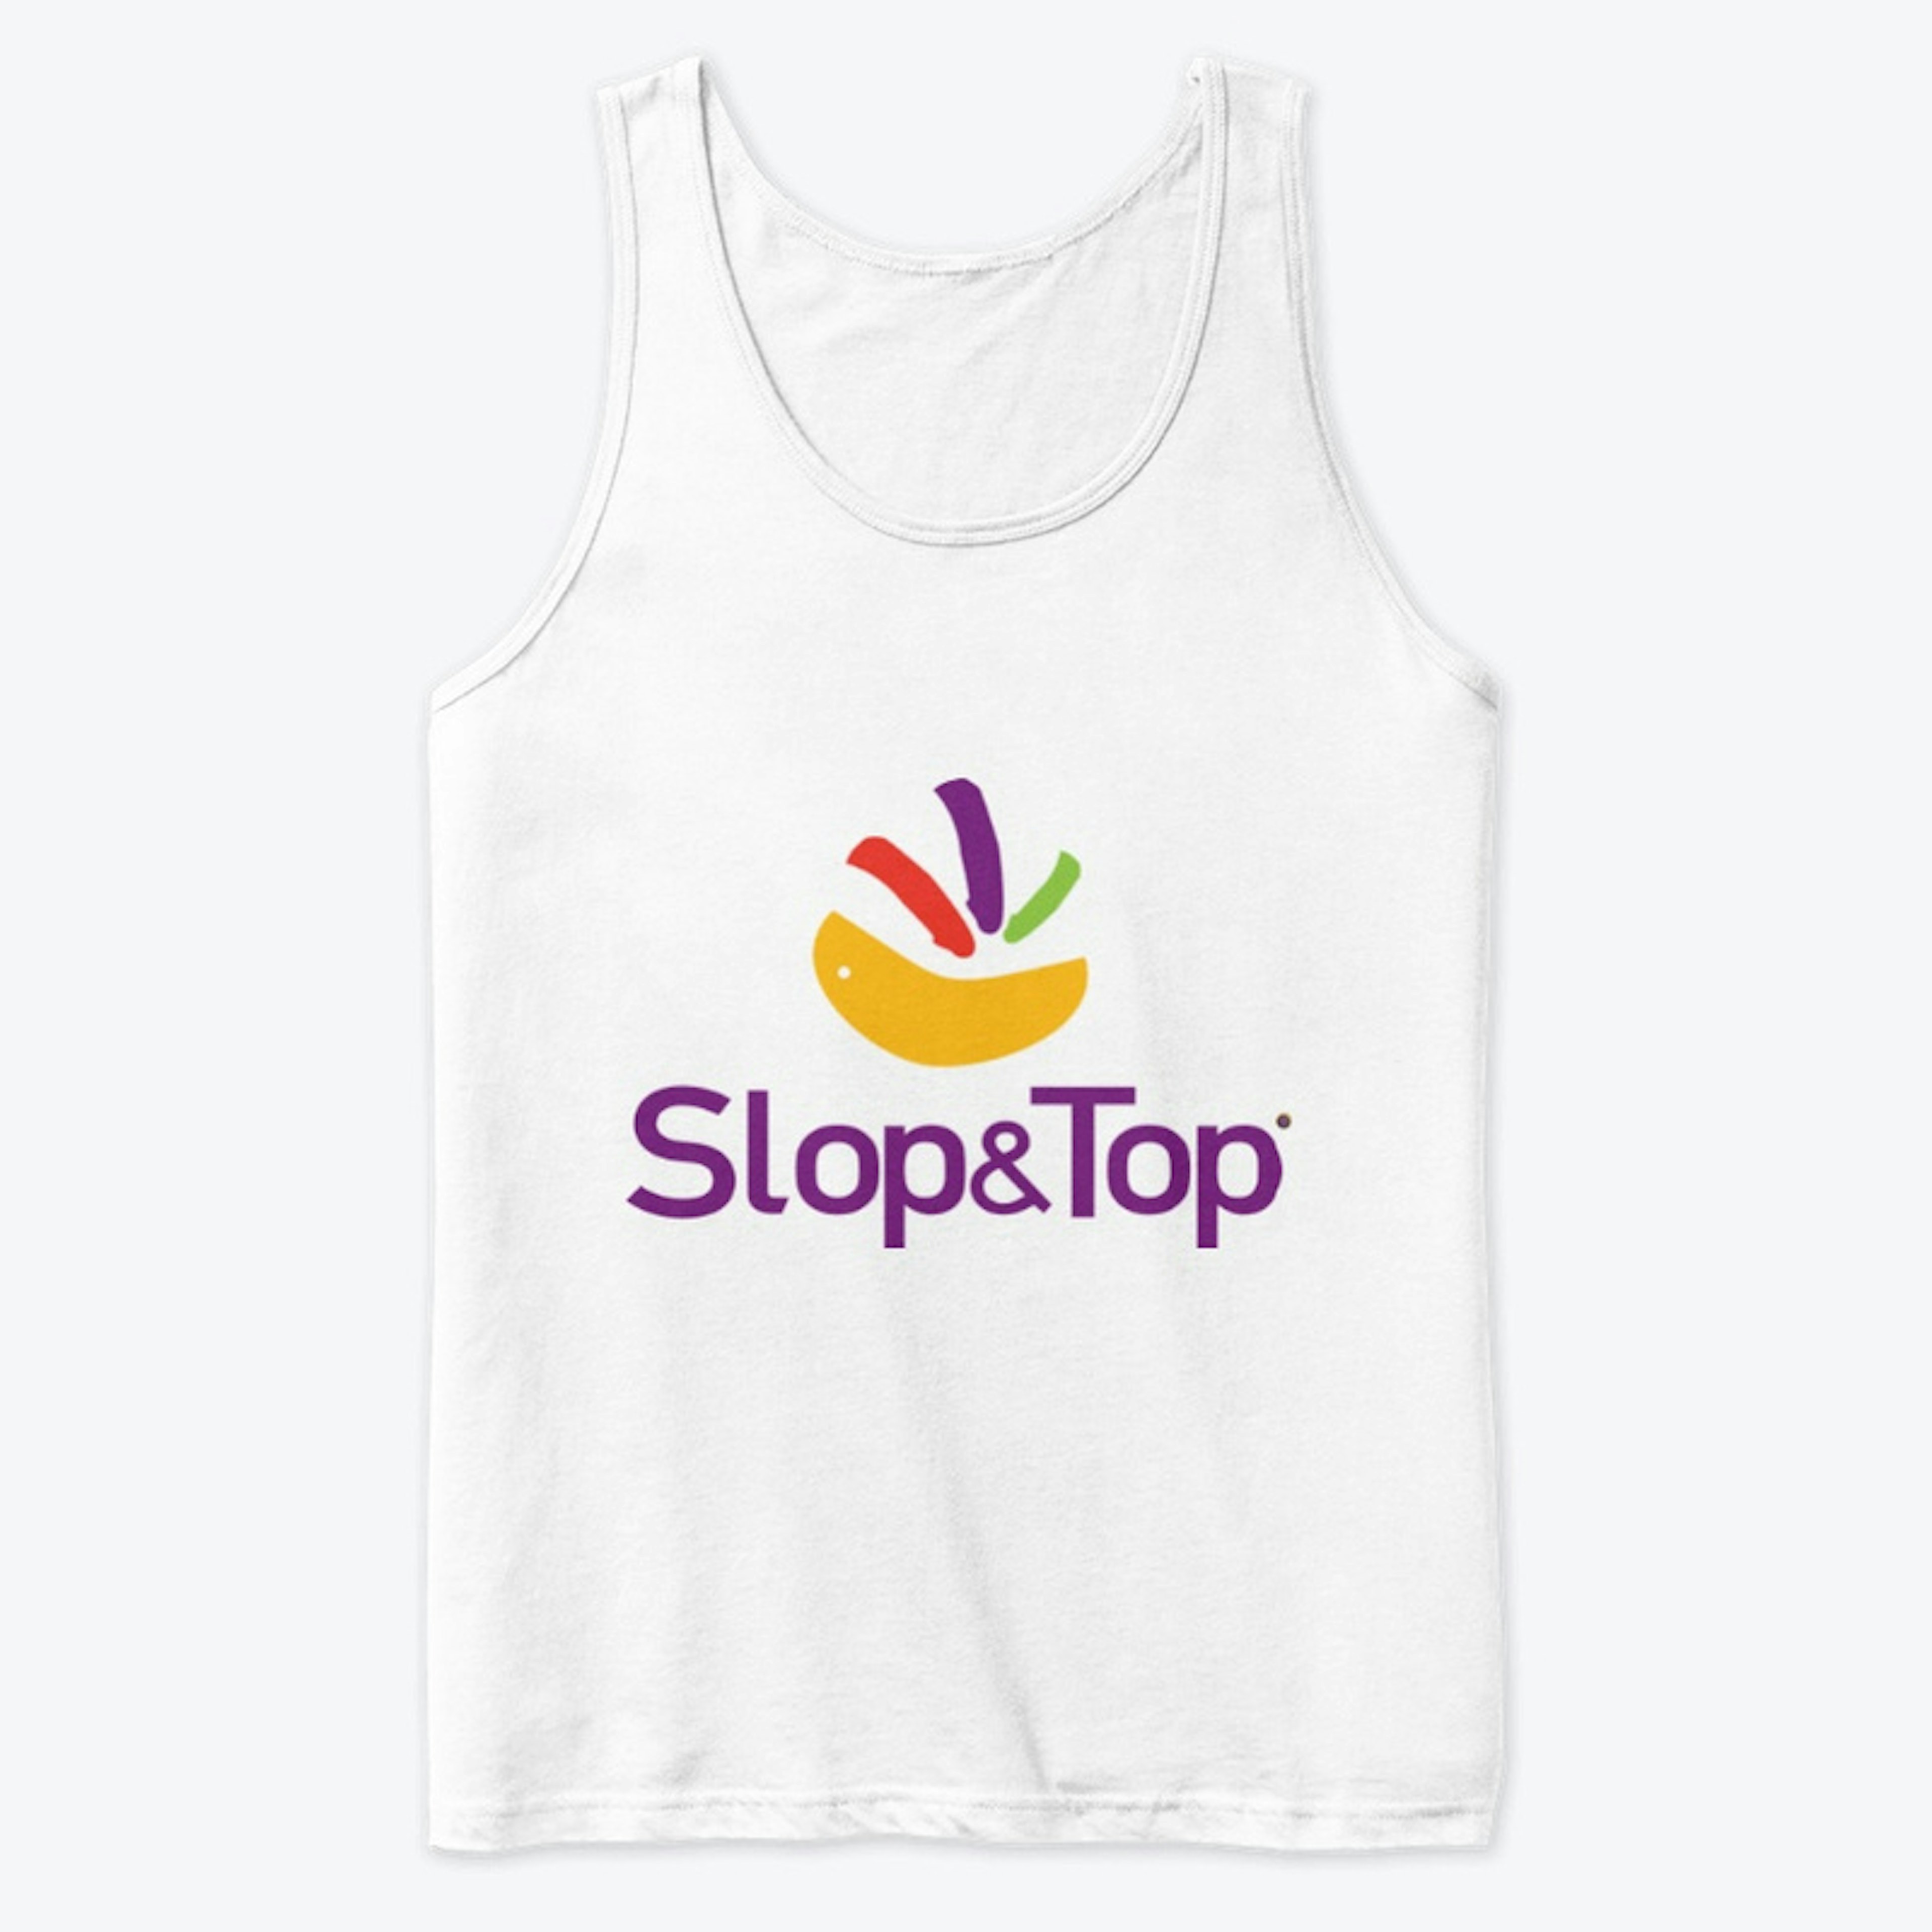 Slop & Top